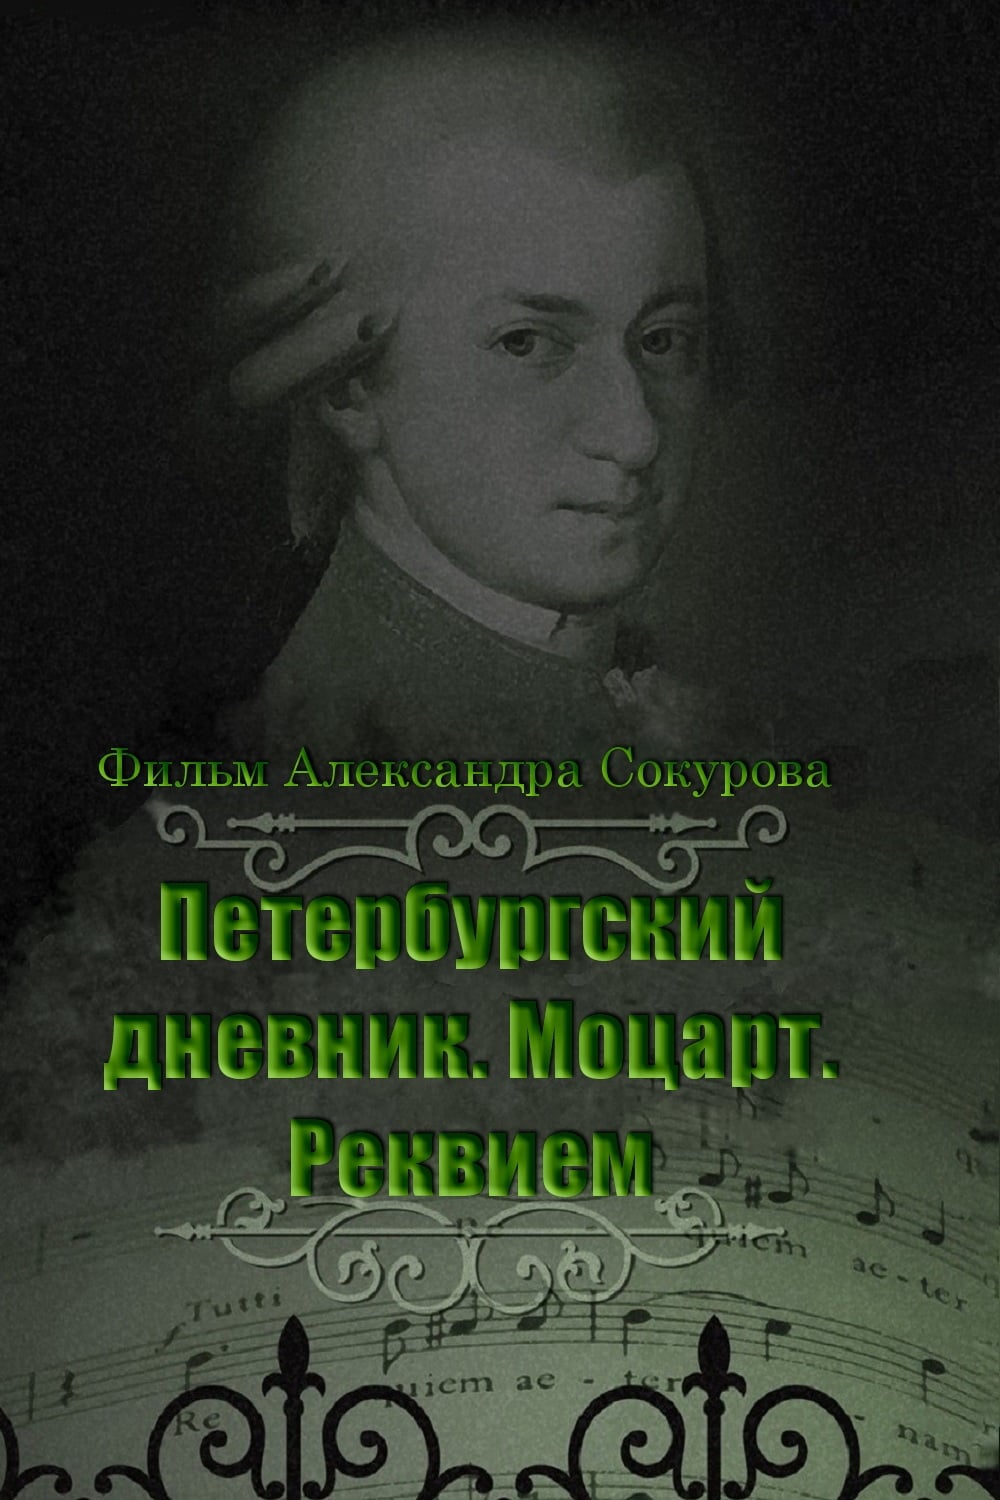 The Diary of St. Petersburg: Mozart. Requiem